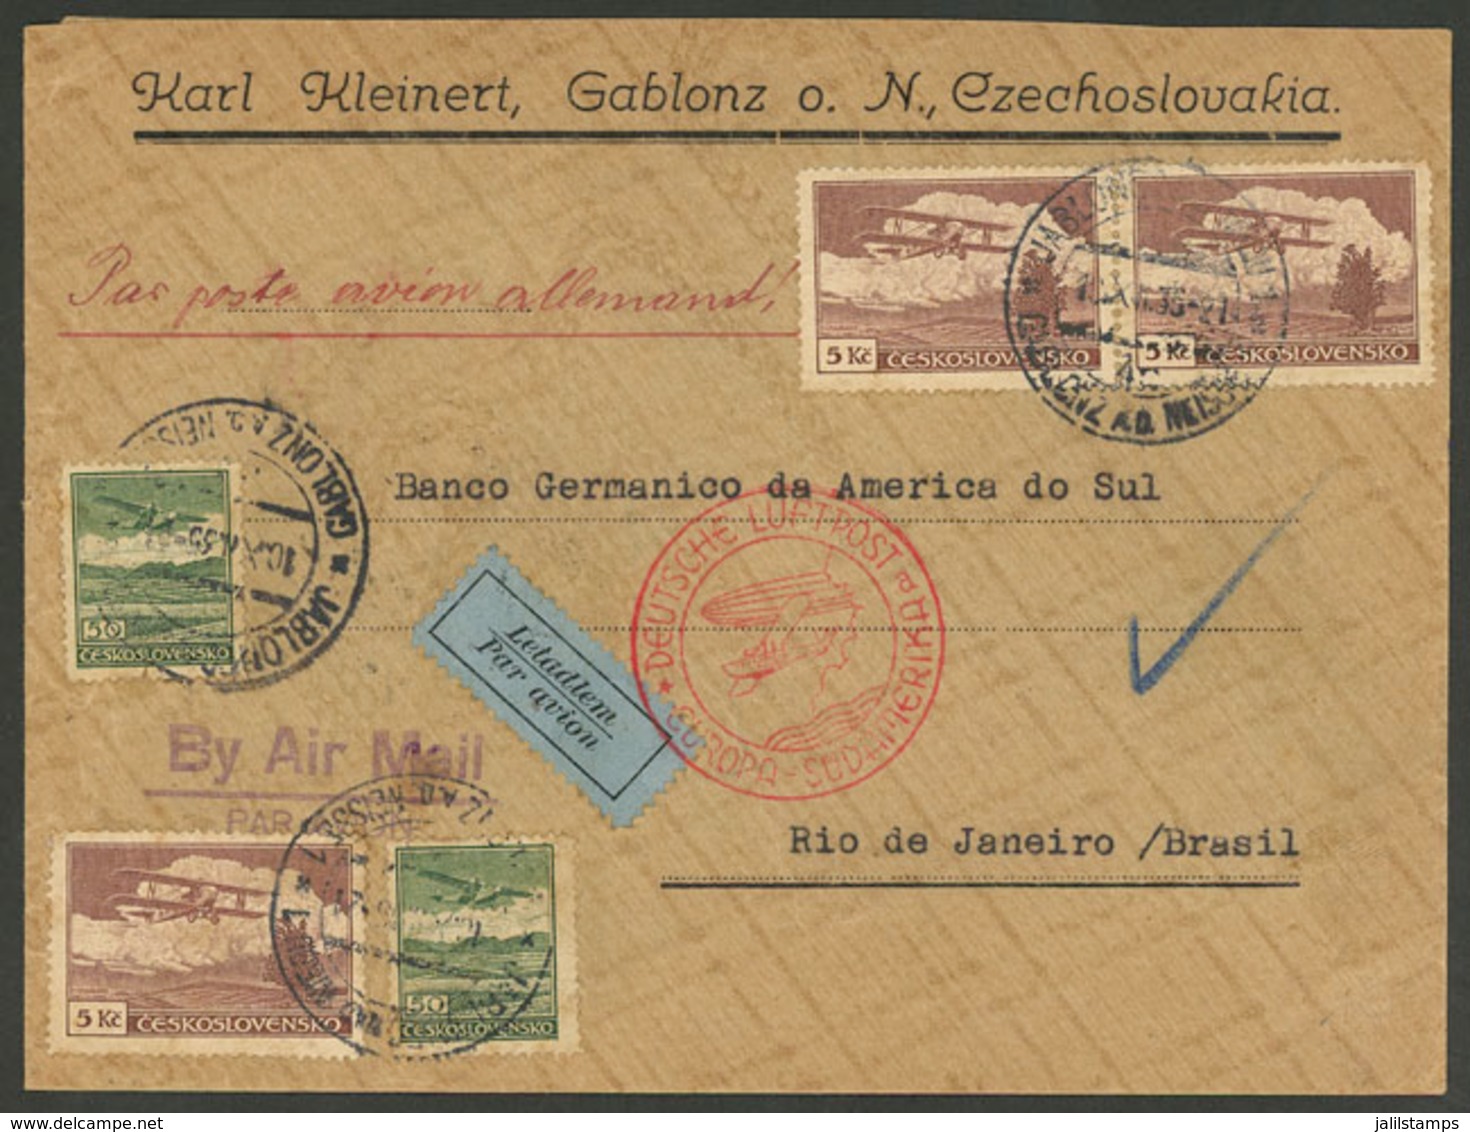 CZECHOSLOVAKIA: 10/DE/1935 Gablonz - Rio De Janeiro: Airmail Cover With Nice Postage, Sent Via Germany (DLH), VF Quality - Lettres & Documents